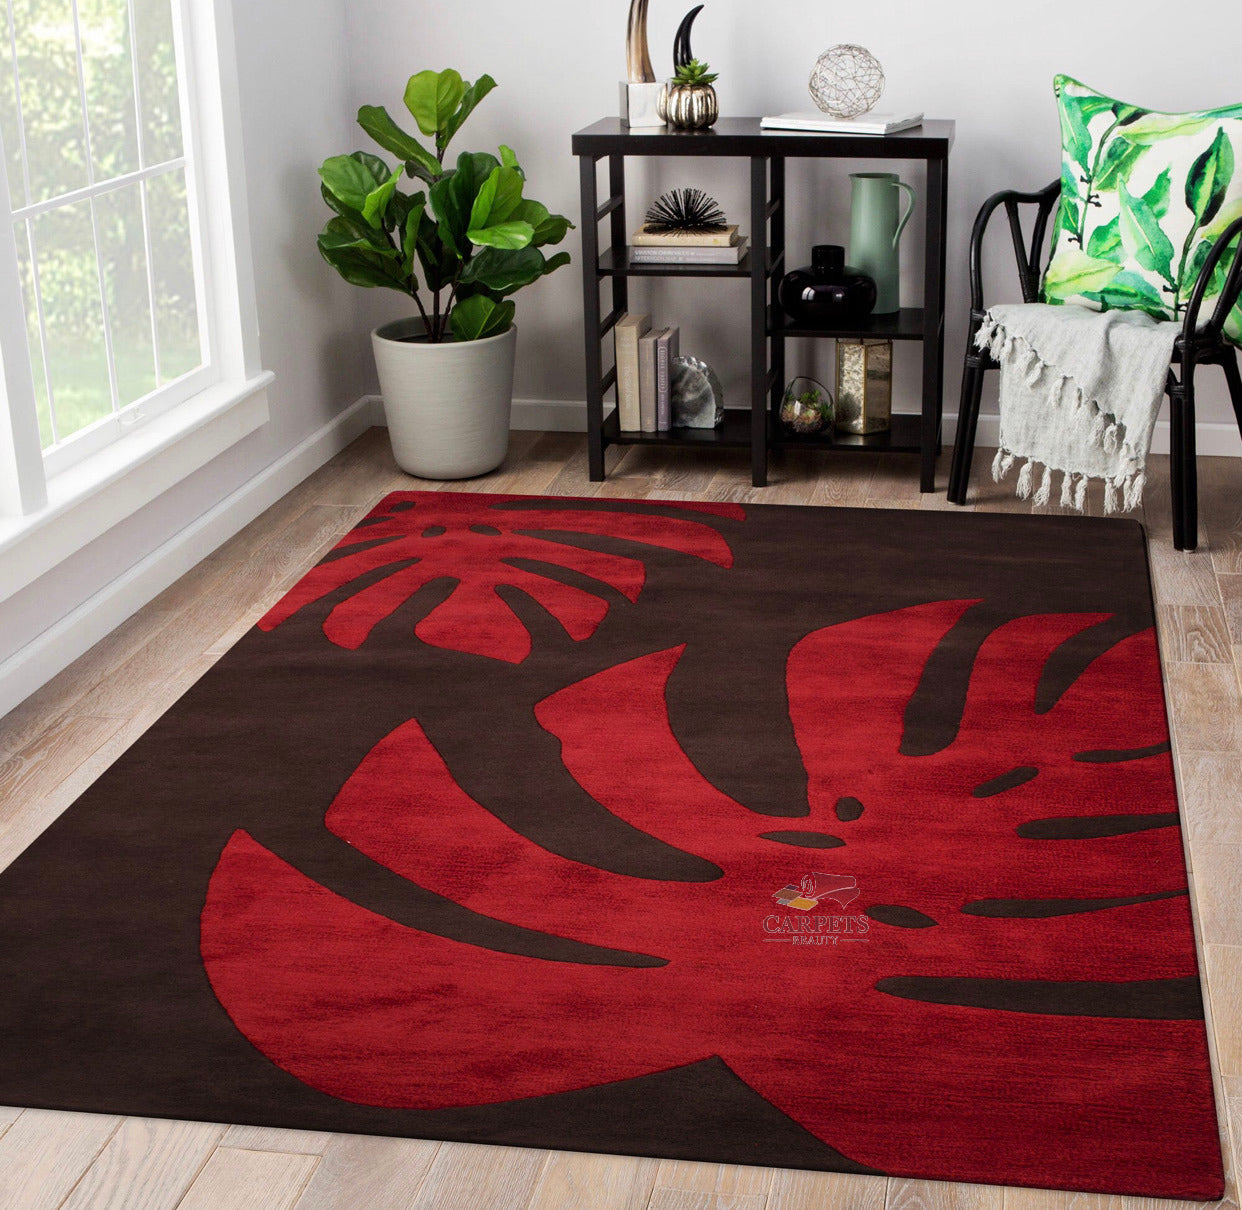 Beautiful red Palm leafs carpet